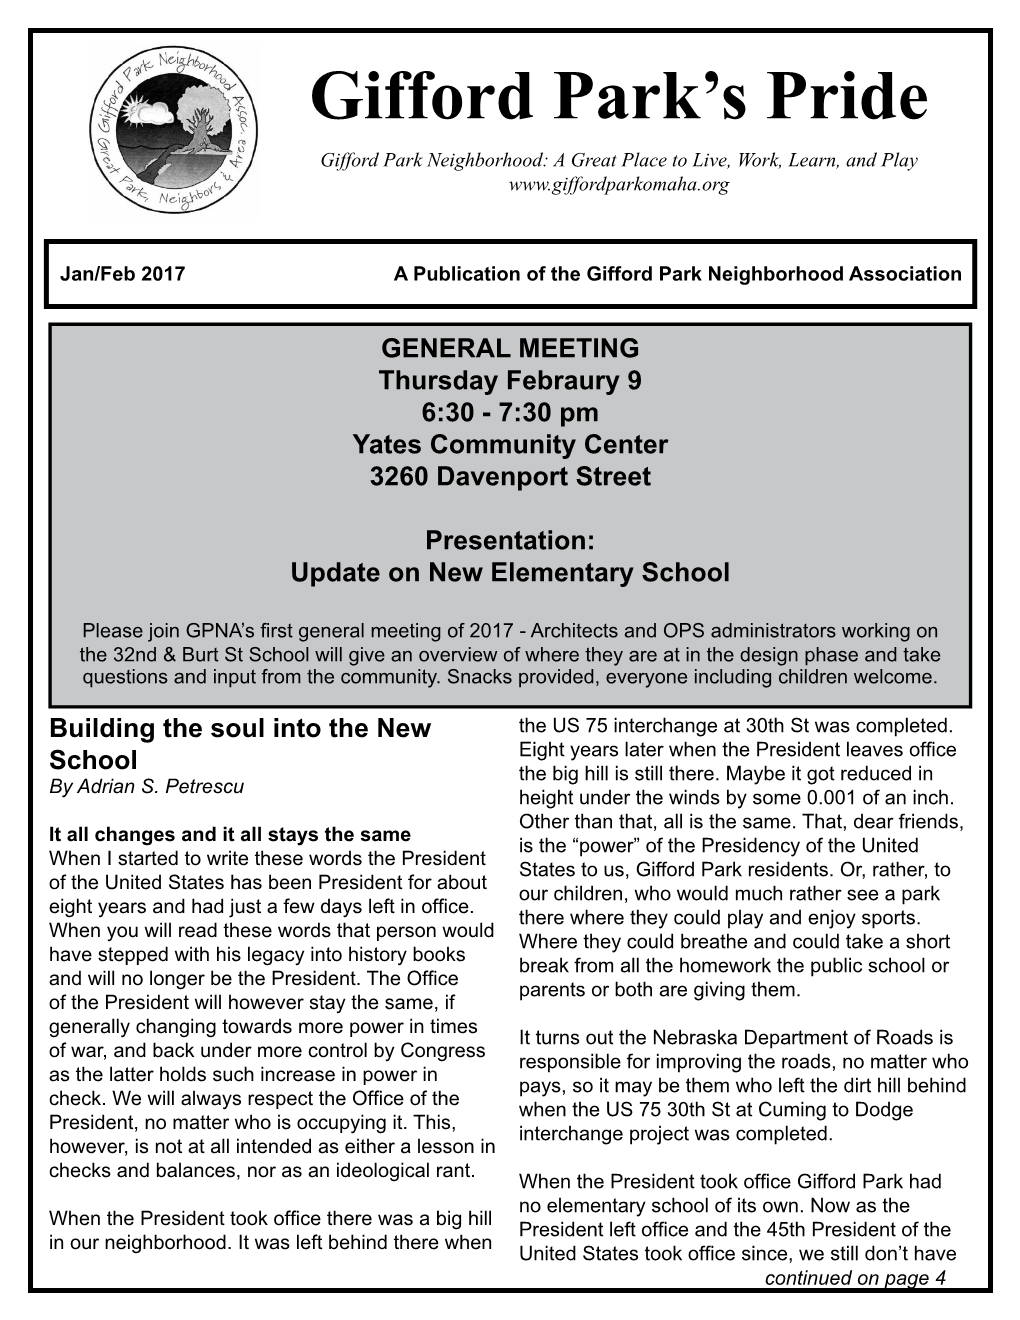 Jan/Feb 2017 a Publication of the Gifford Park Neighborhood Association